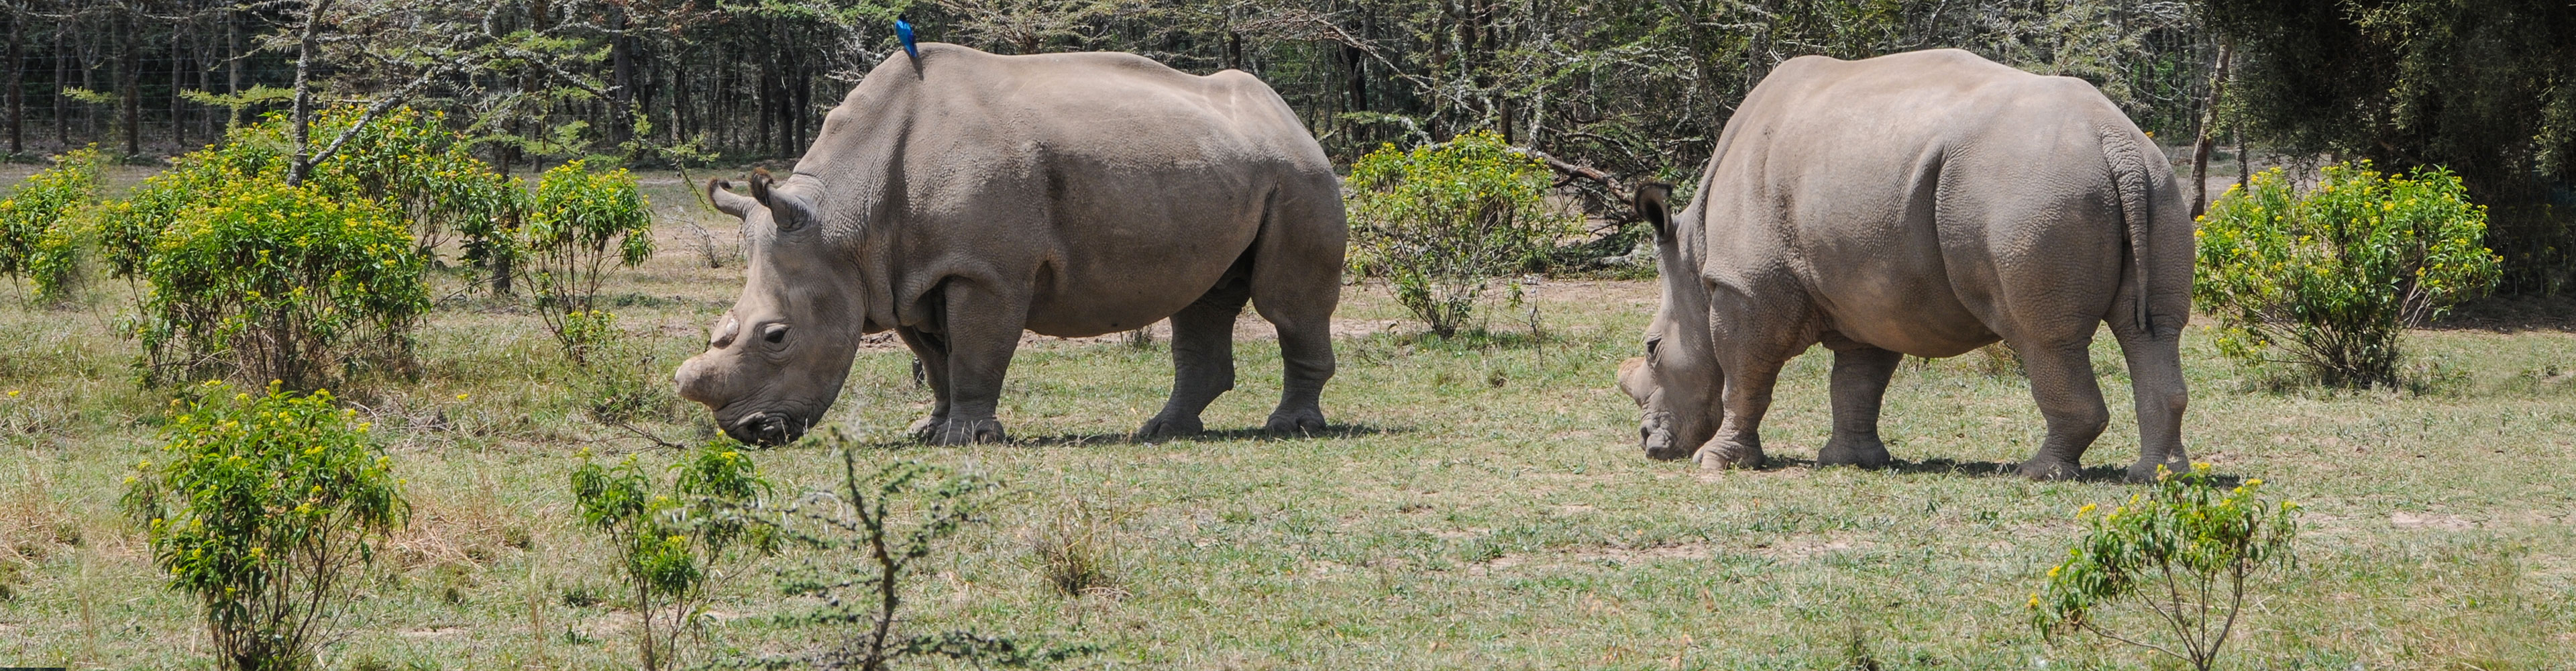 Kenya Expedition: The Last Northern White Rhinos